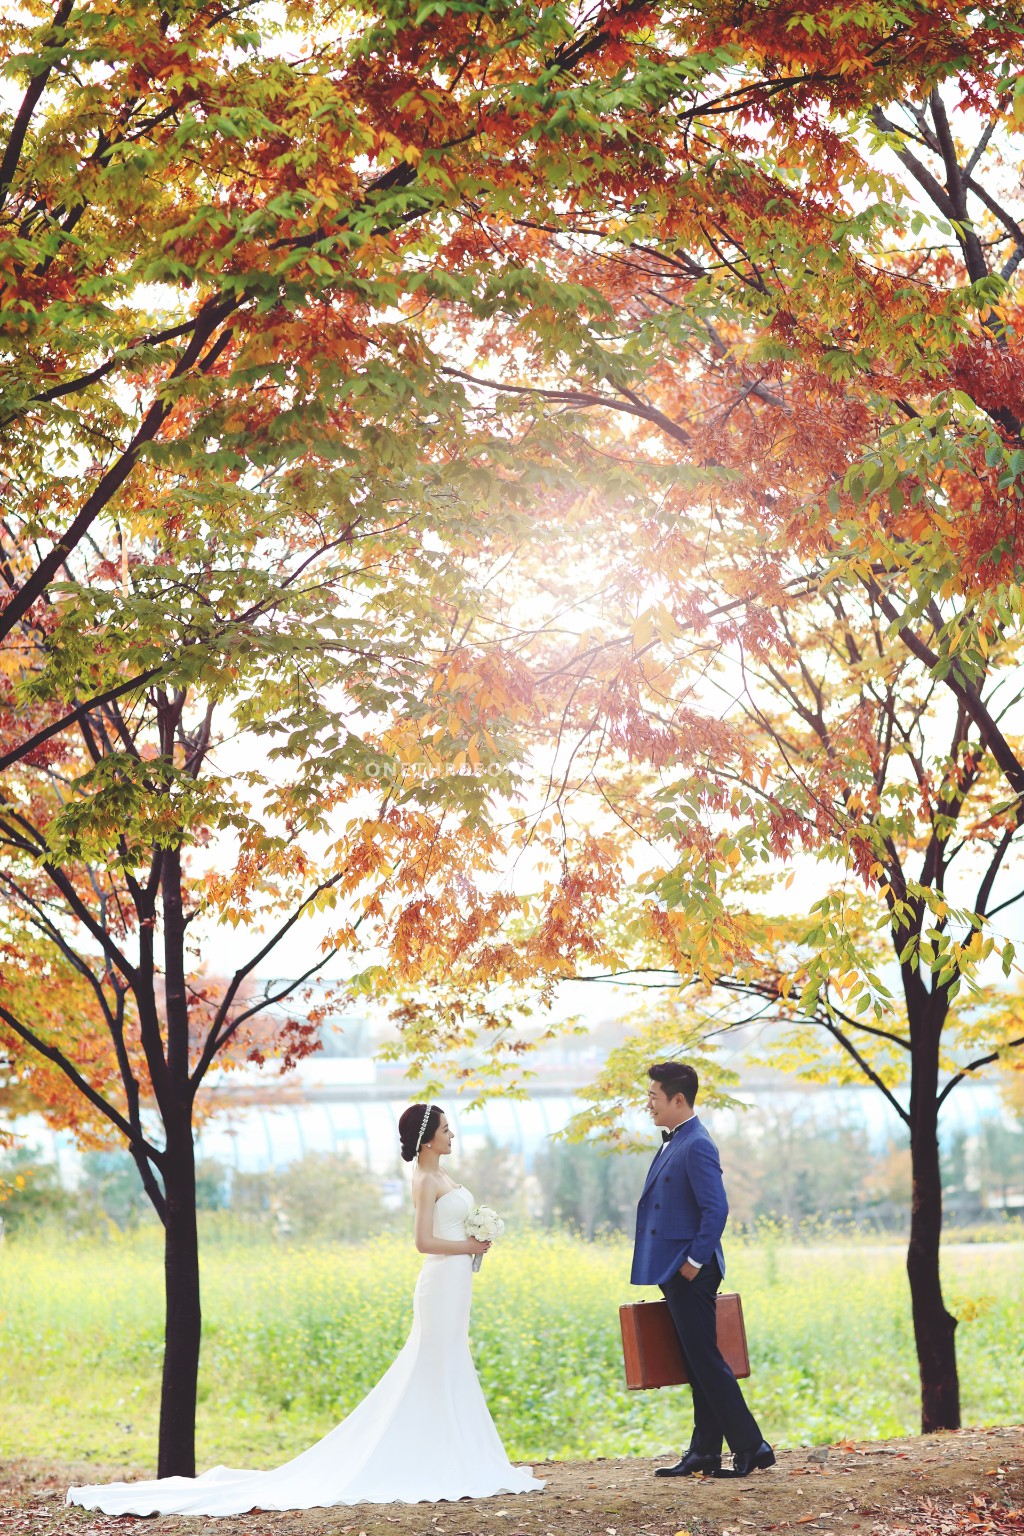 Studio Bong Korea Autumn Outdoor Pre-Wedding Photography - Past Clients by Bong Studio on OneThreeOneFour 16